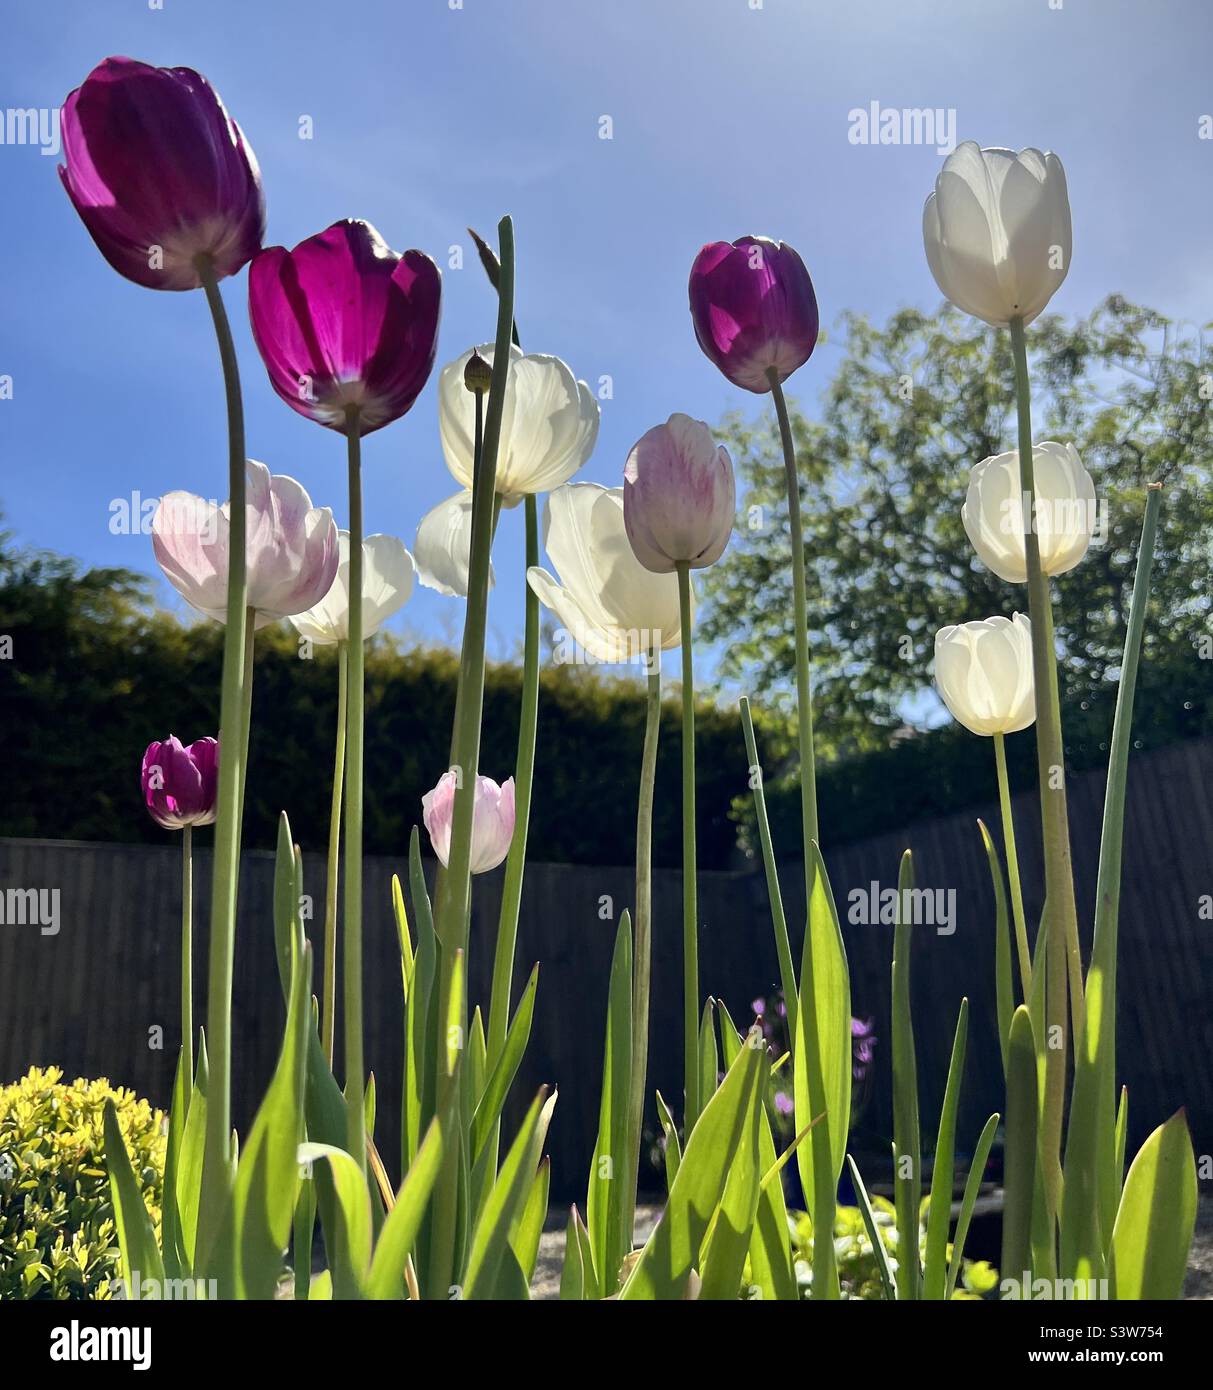 Grands tulipes d'un angle bas Banque D'Images